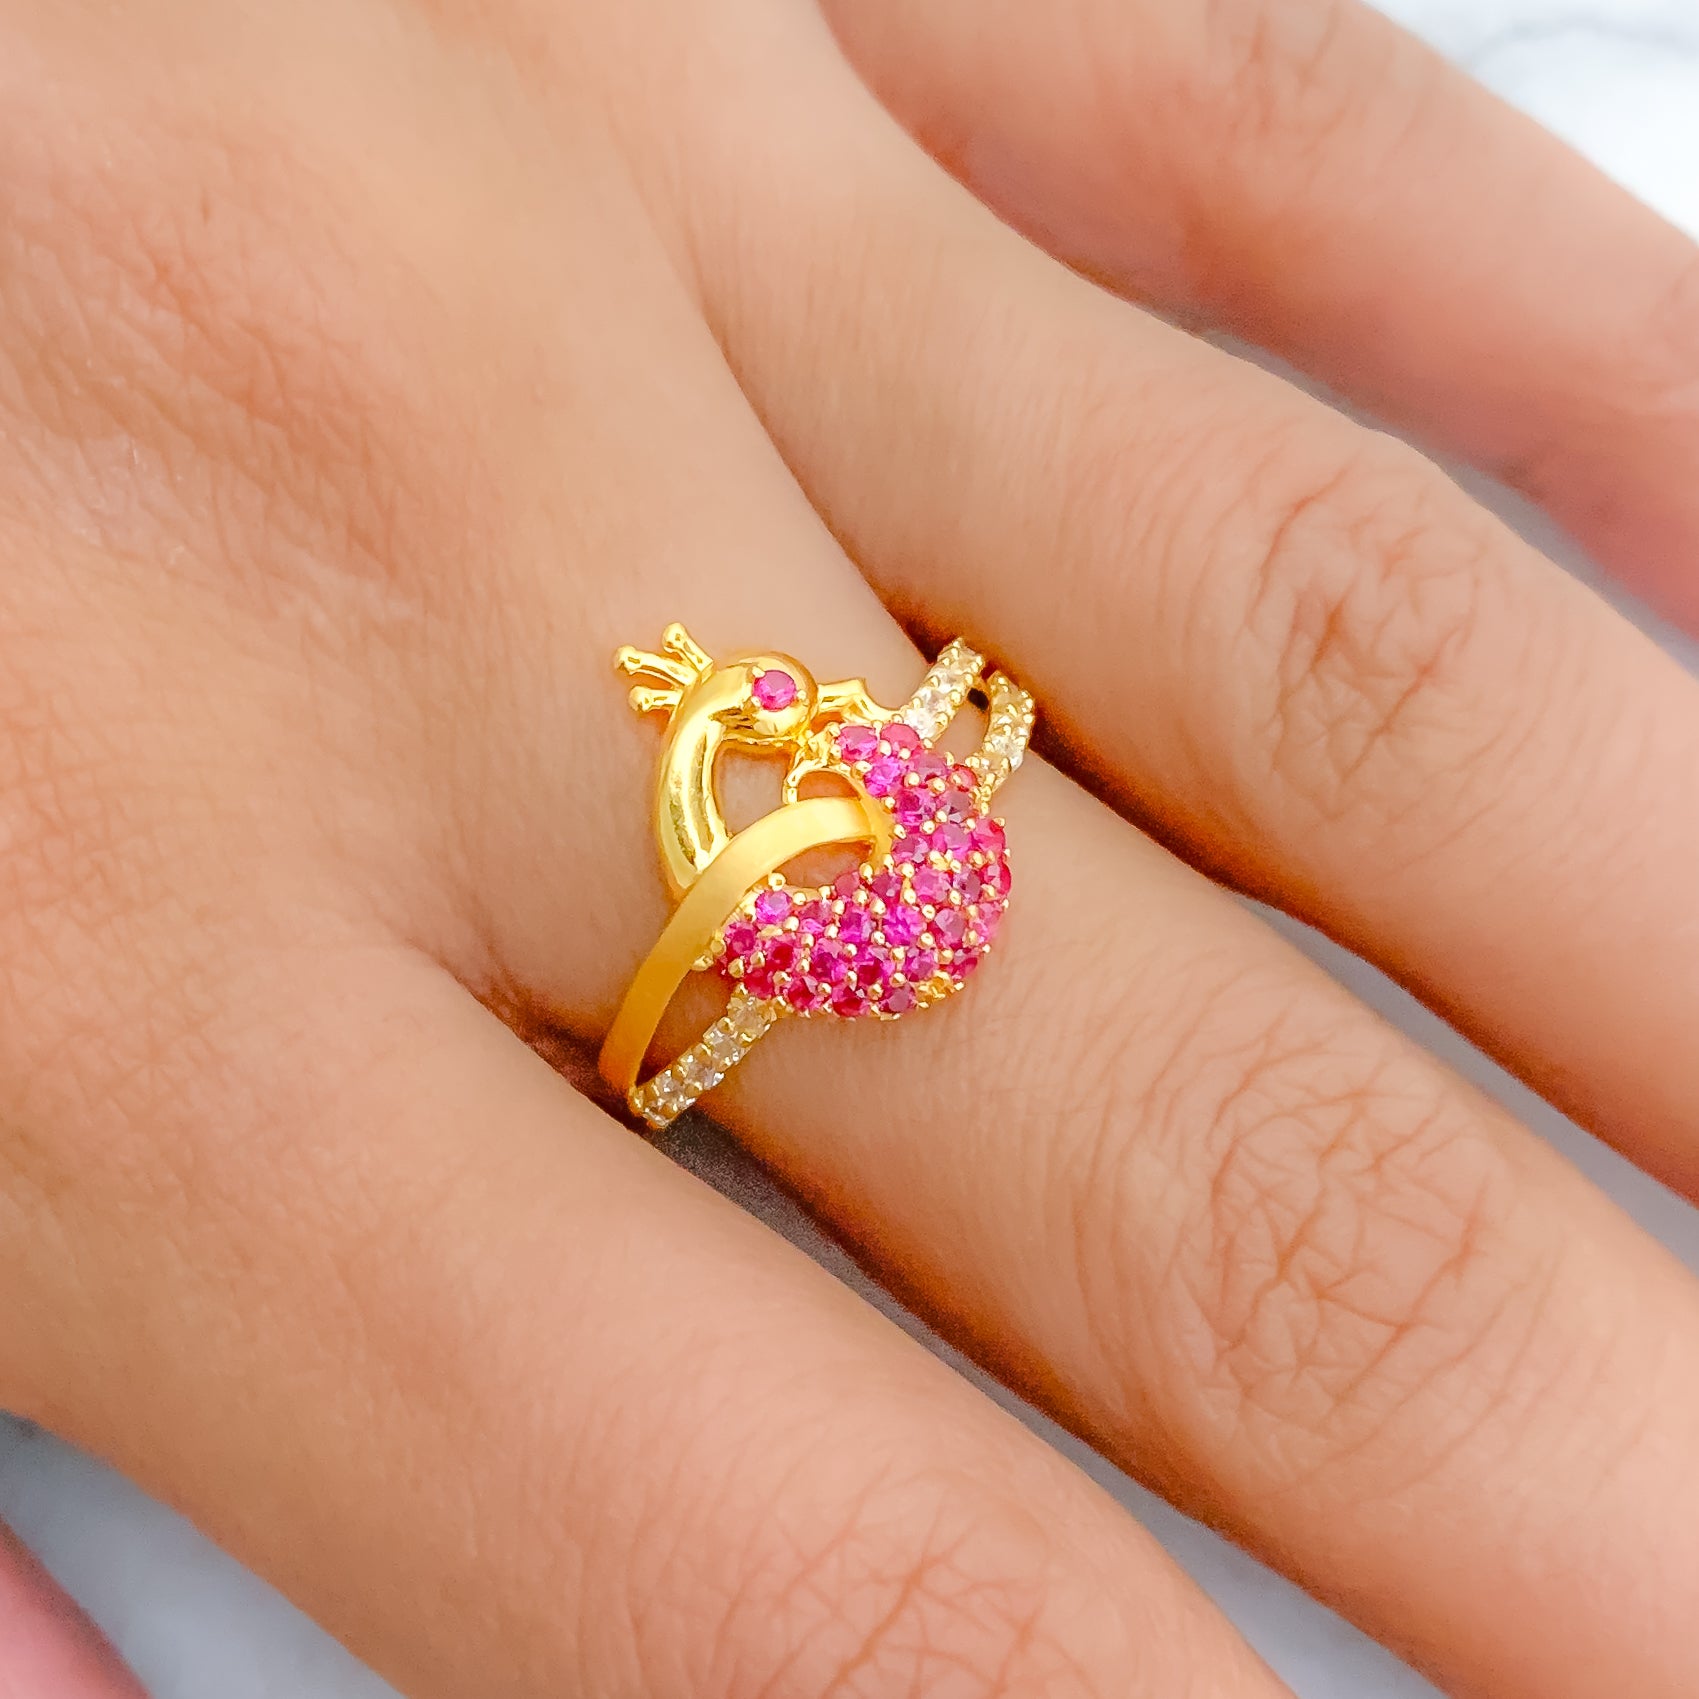 Stunning Peacock Design Gold Ring